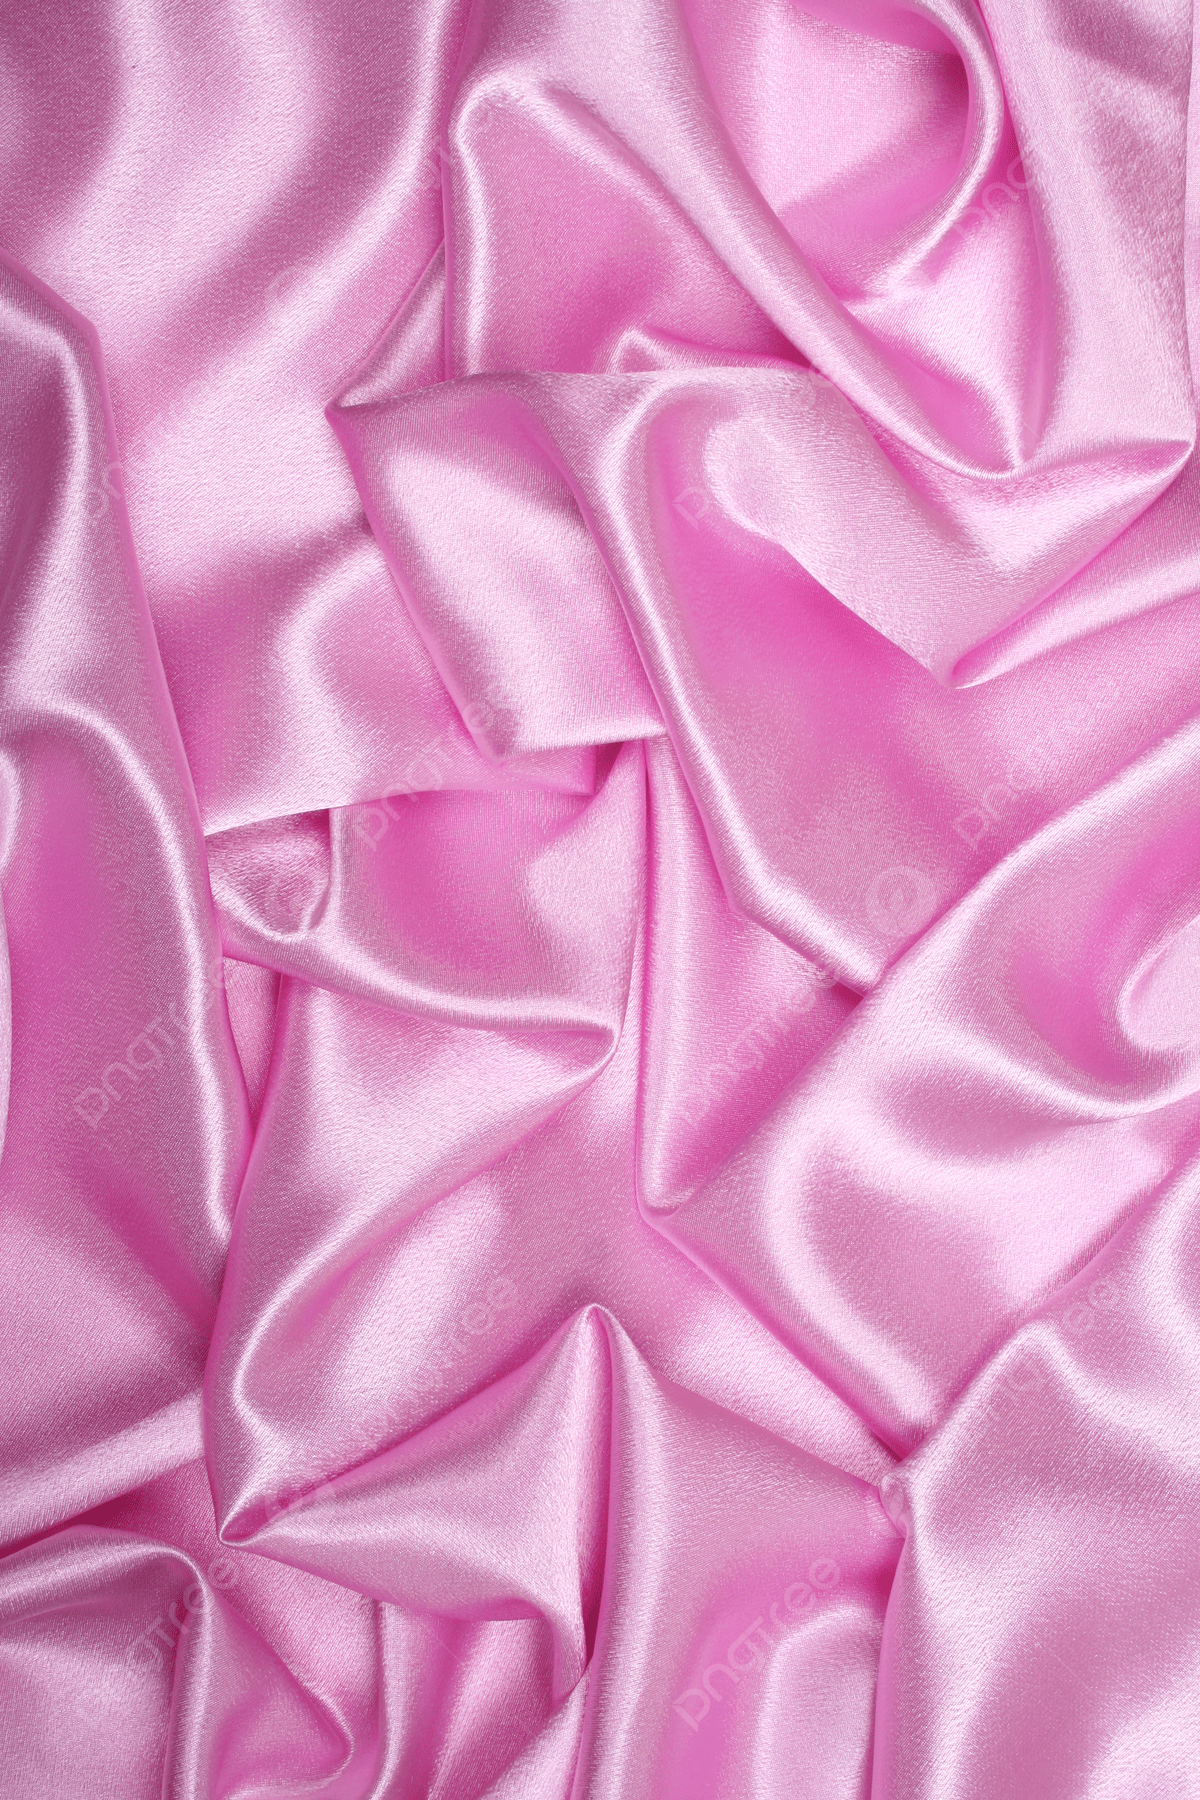 A close up of a pink silk fabric - Silk